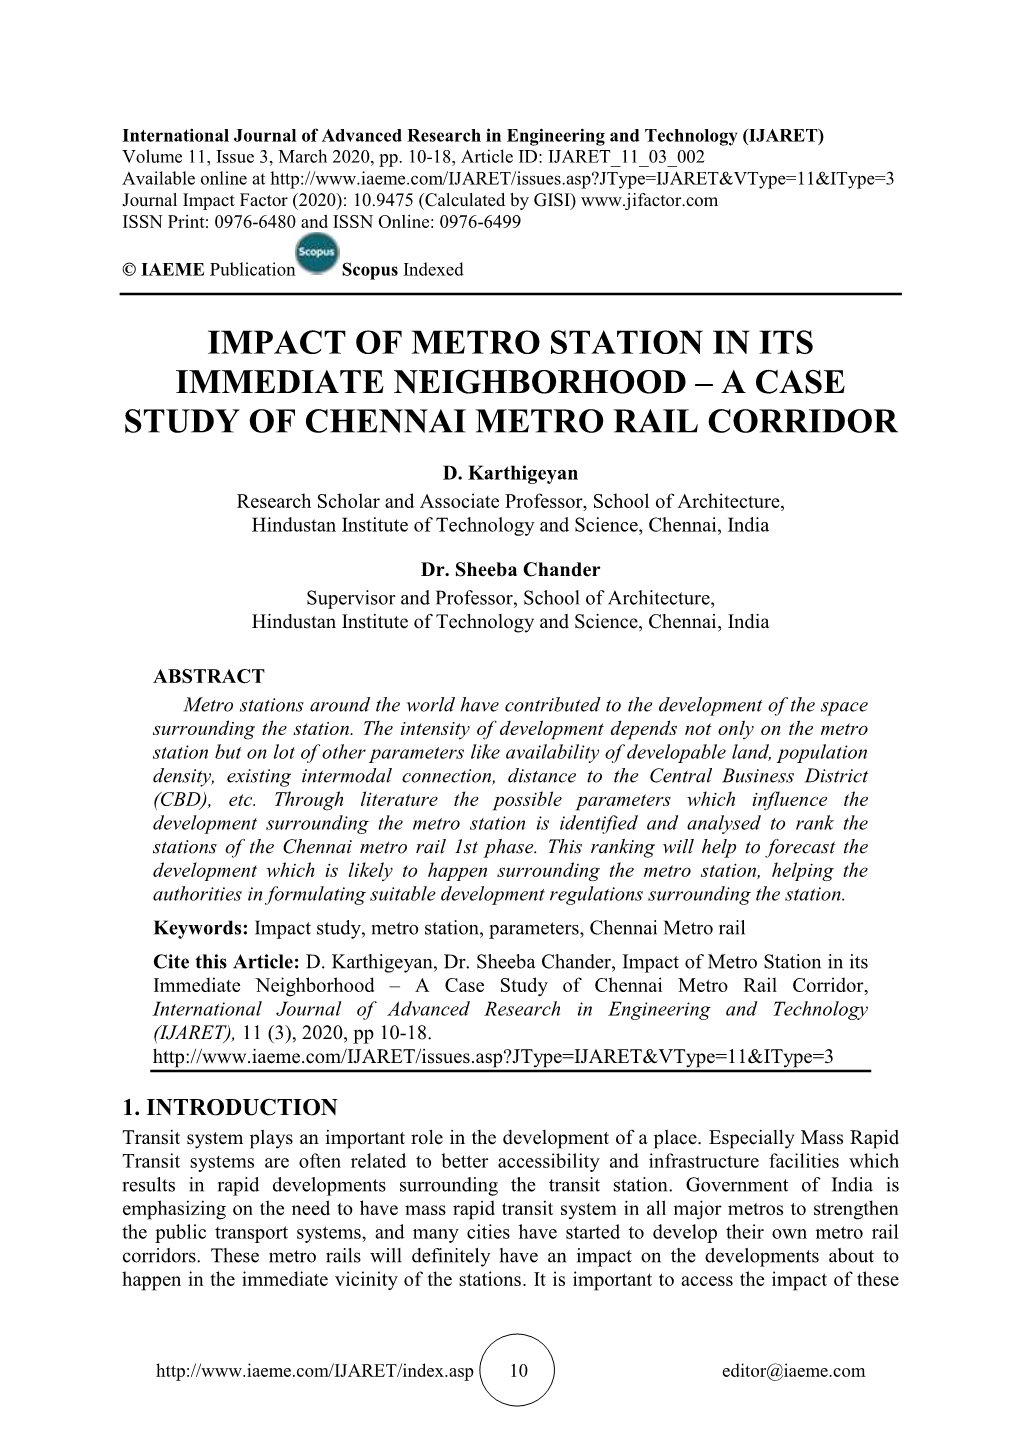 Impact of Metro Station in Its Immediate Neighborhood – a Case Study of Chennai Metro Rail Corridor